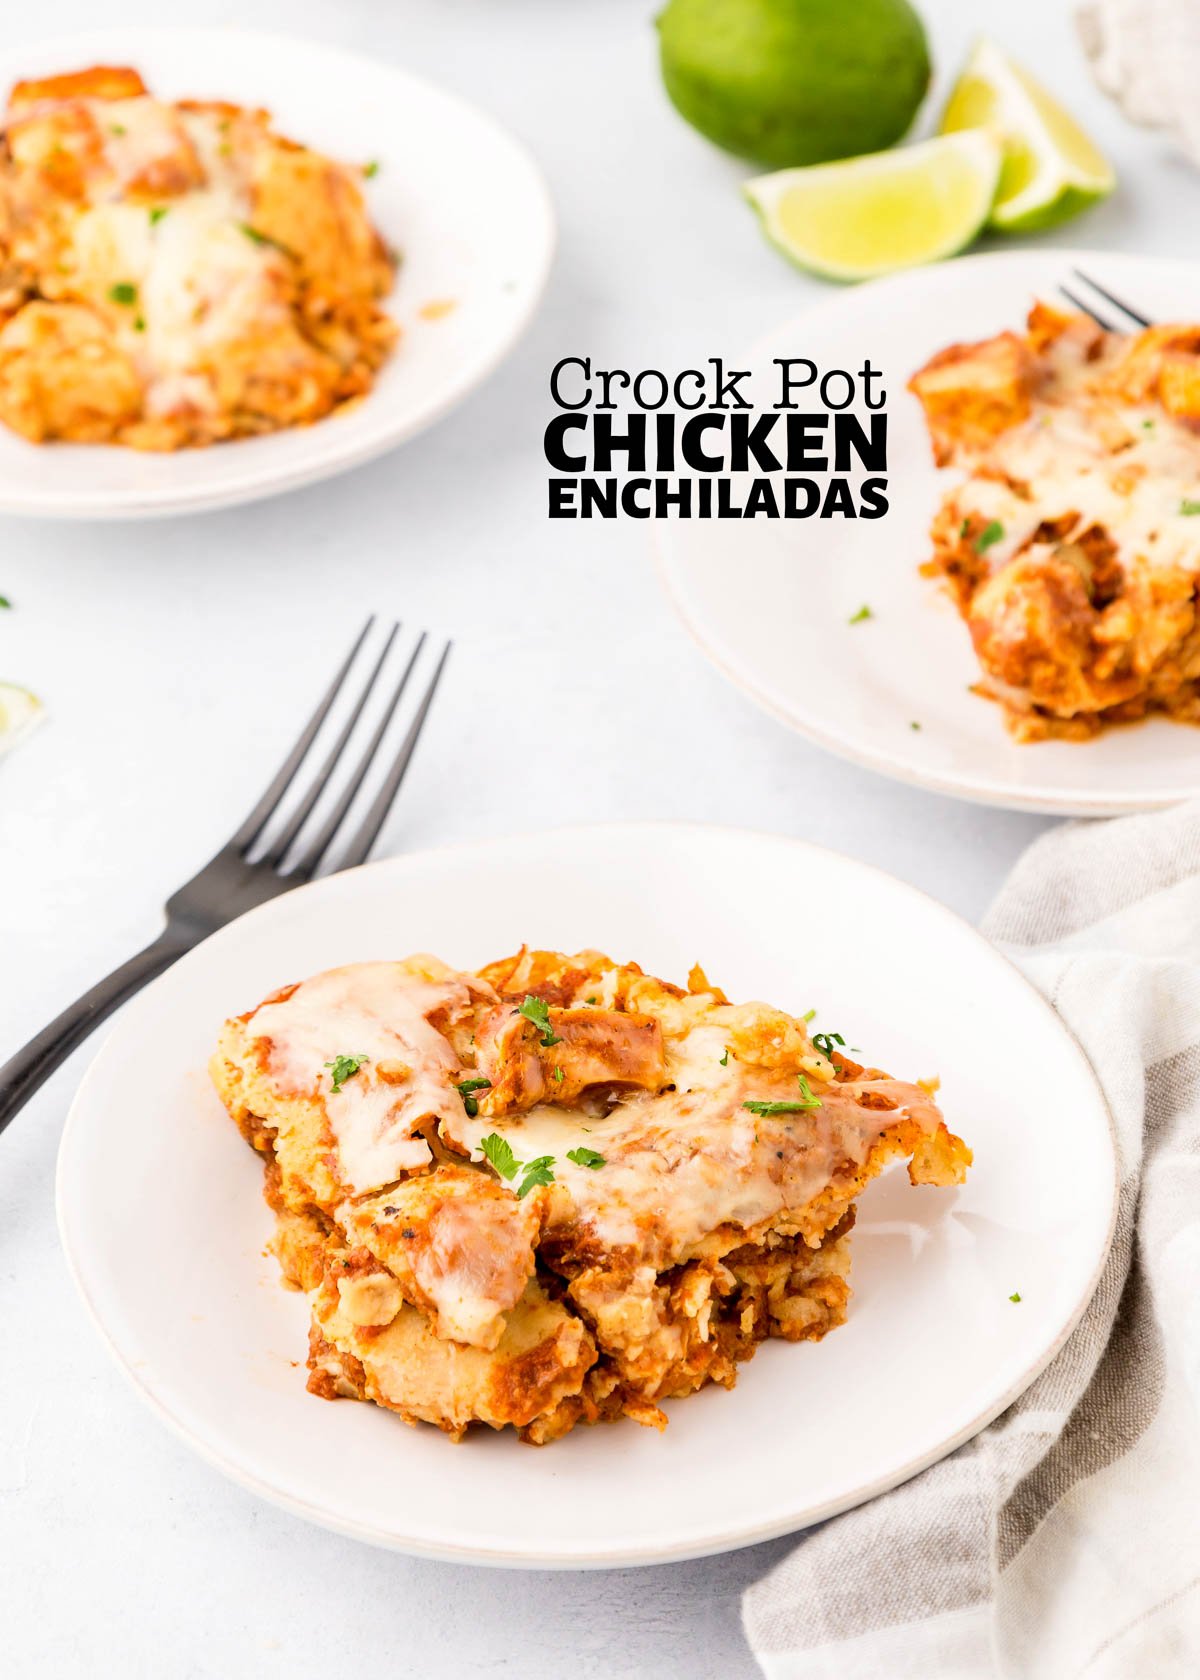 Crock Pot Chicken Enchiladas with text overlay.